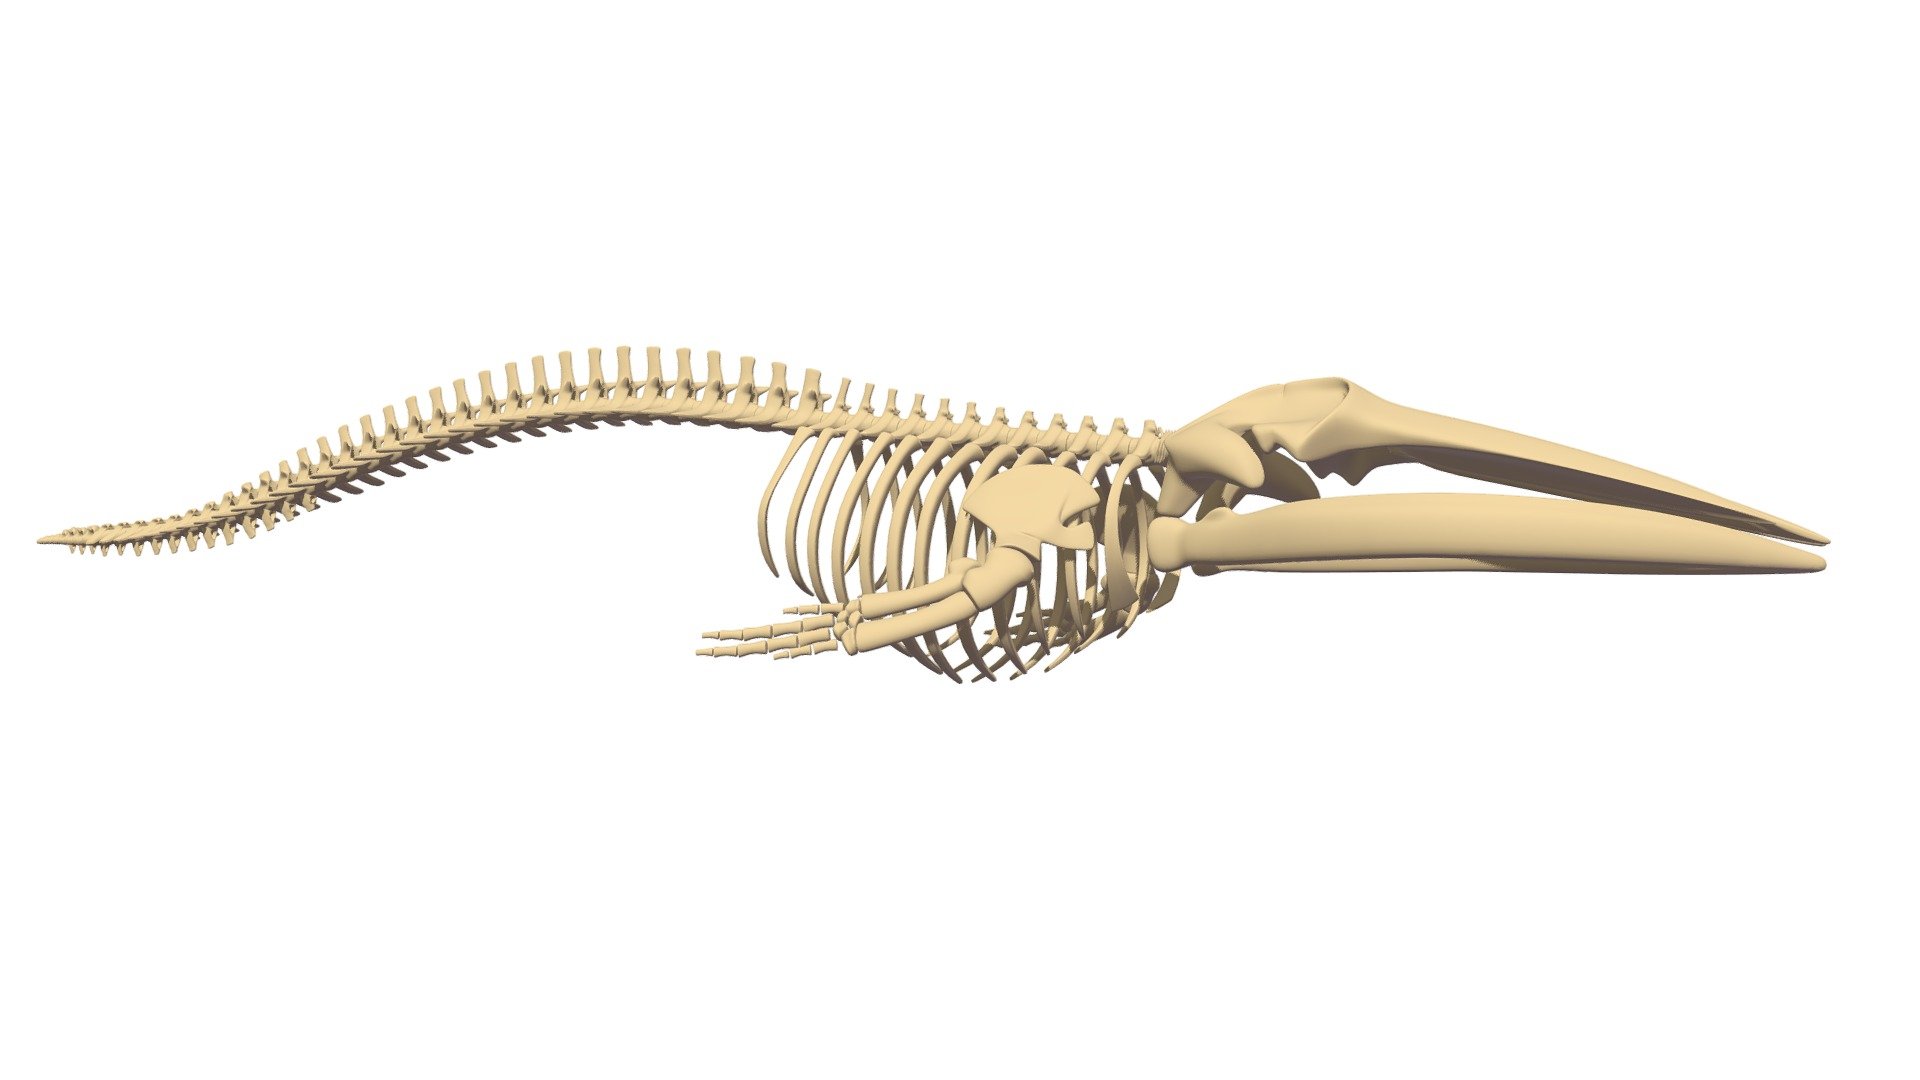 High quality 3d model of fin whale skeleton 3d model